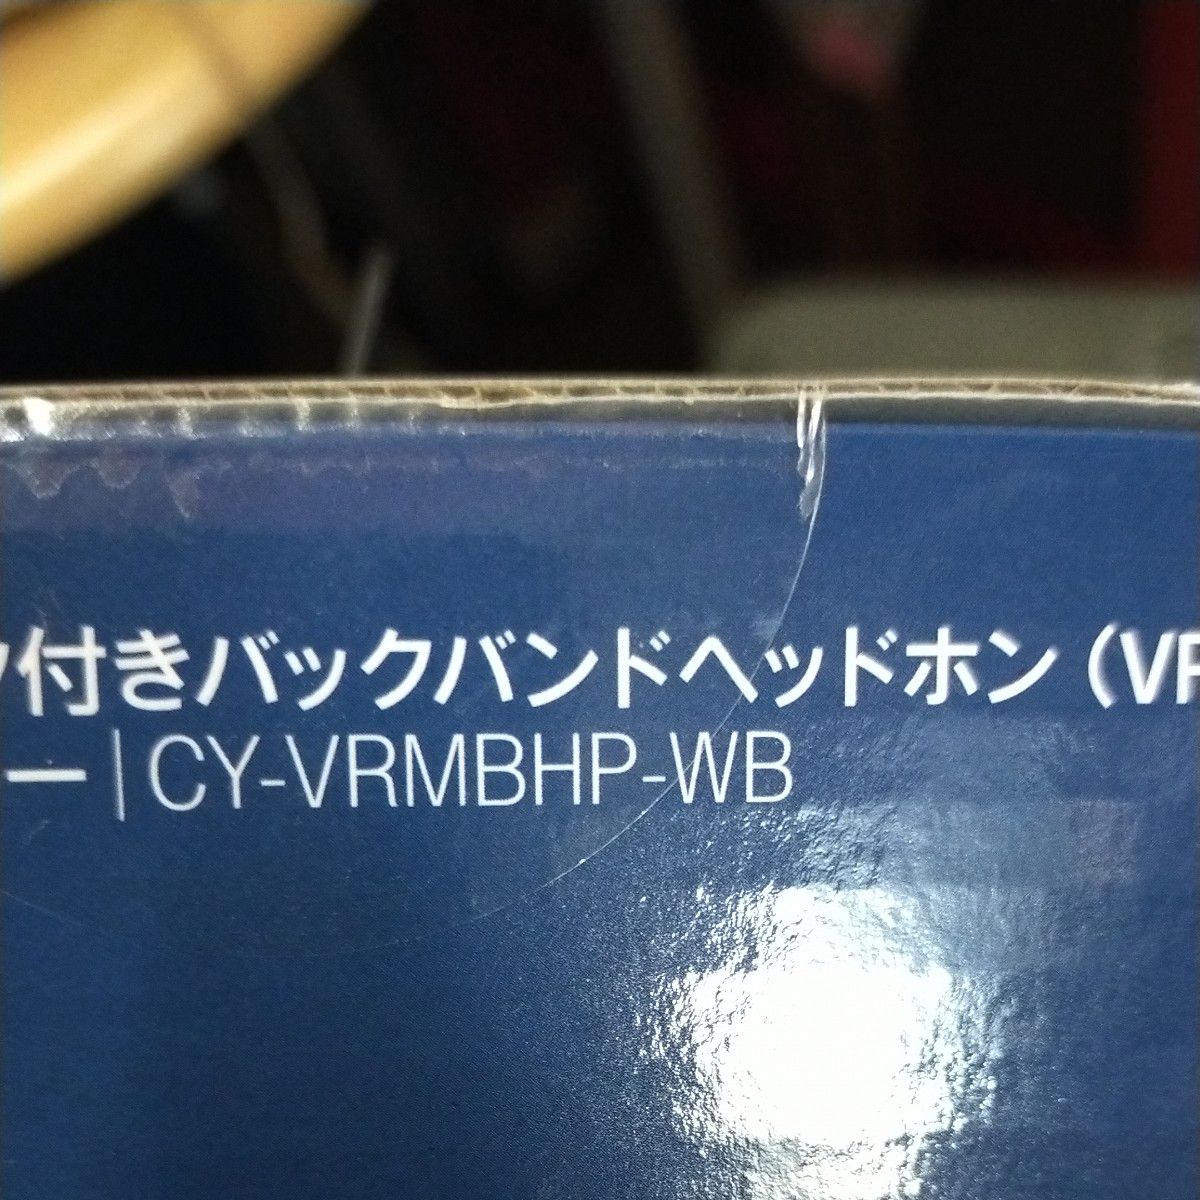 CYBER マイク付きバックバンドヘッドホン (VR 用) ホワイト×ブルー - PS4 サイバーガジェット